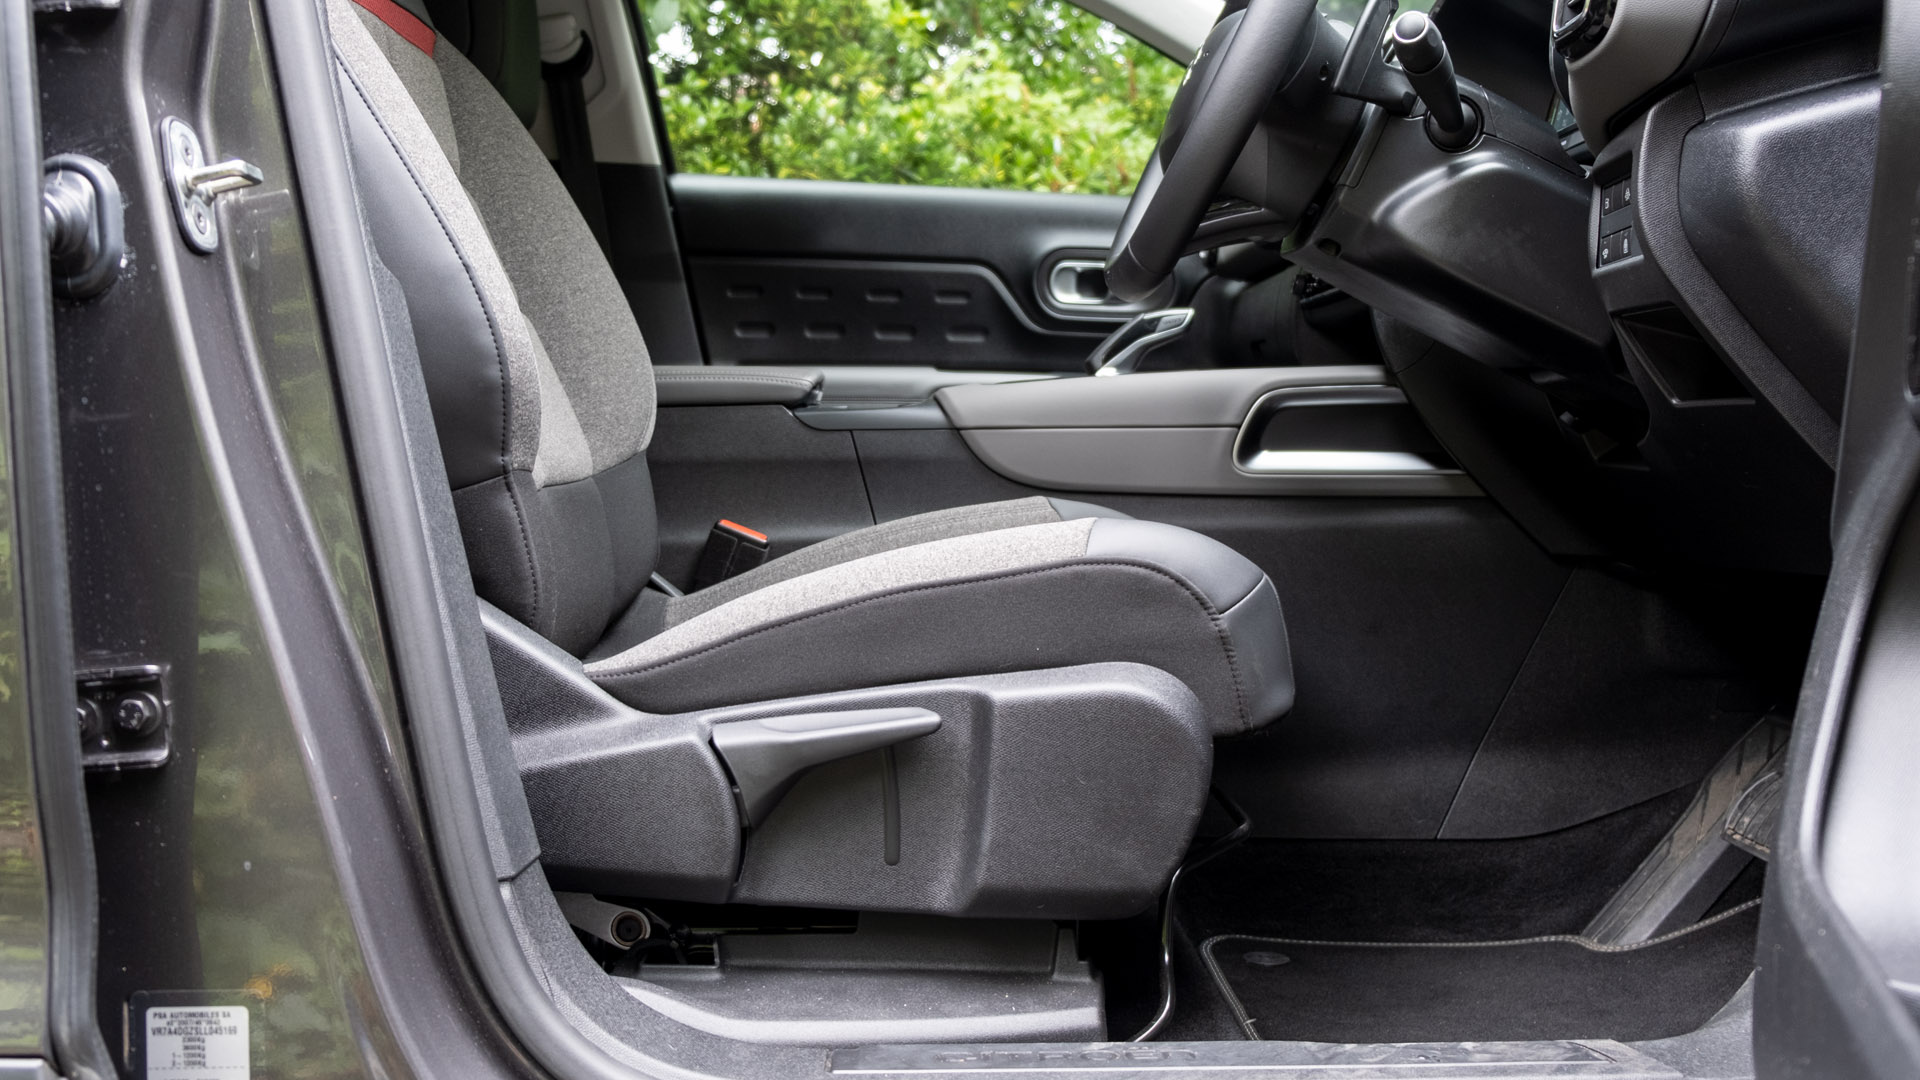 Citroen C5 Aircross Hybrid front seat comfort